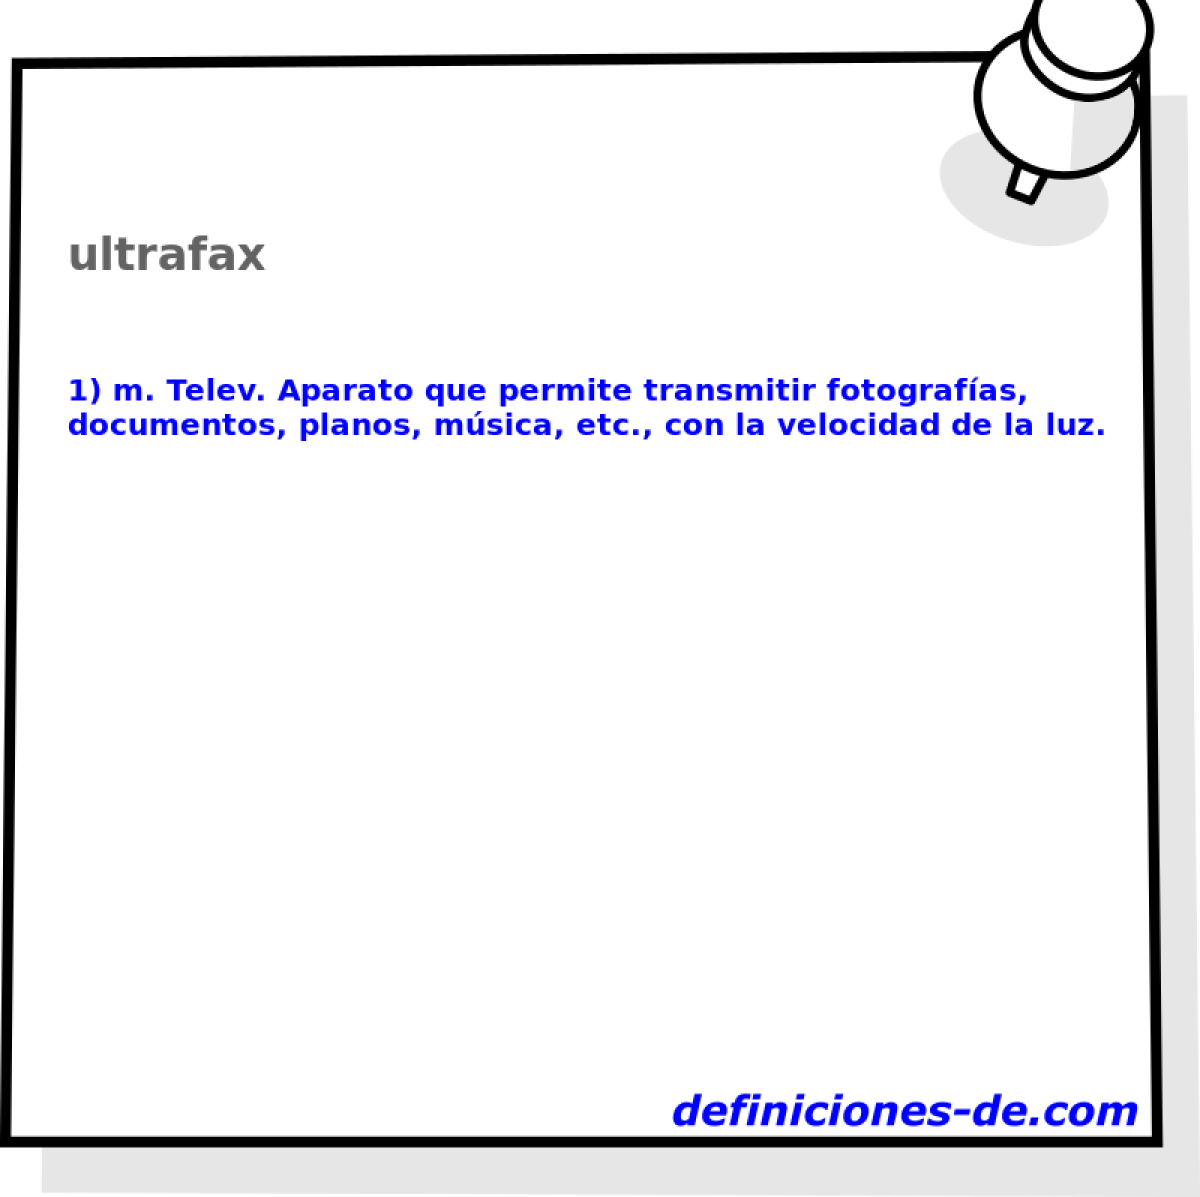 ultrafax 